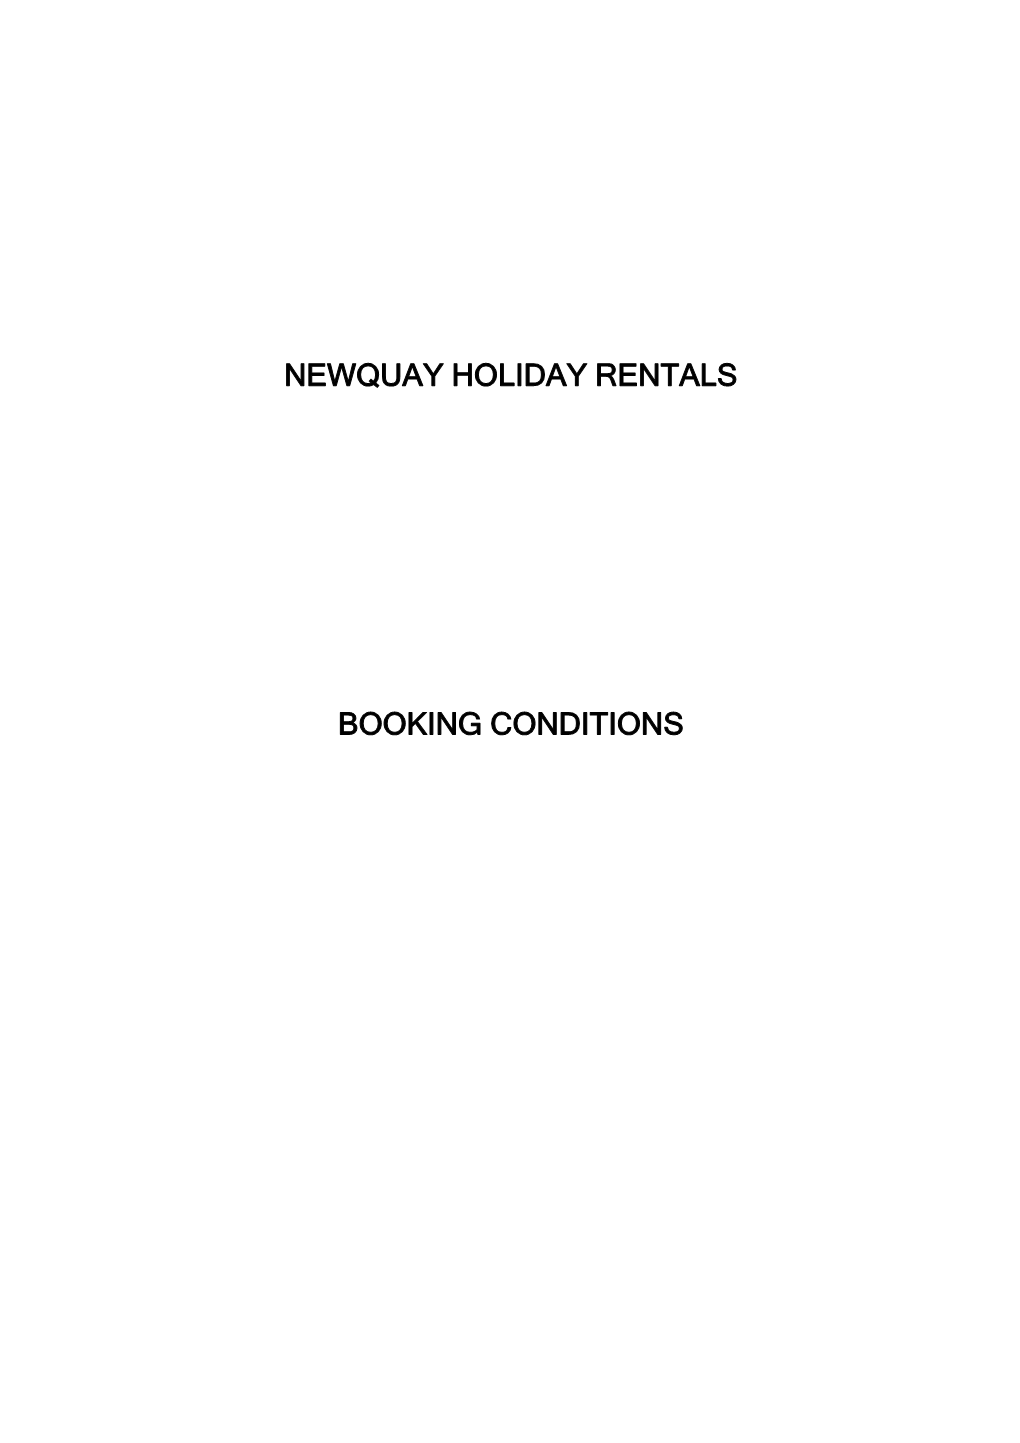 Newquay Holiday Rentals